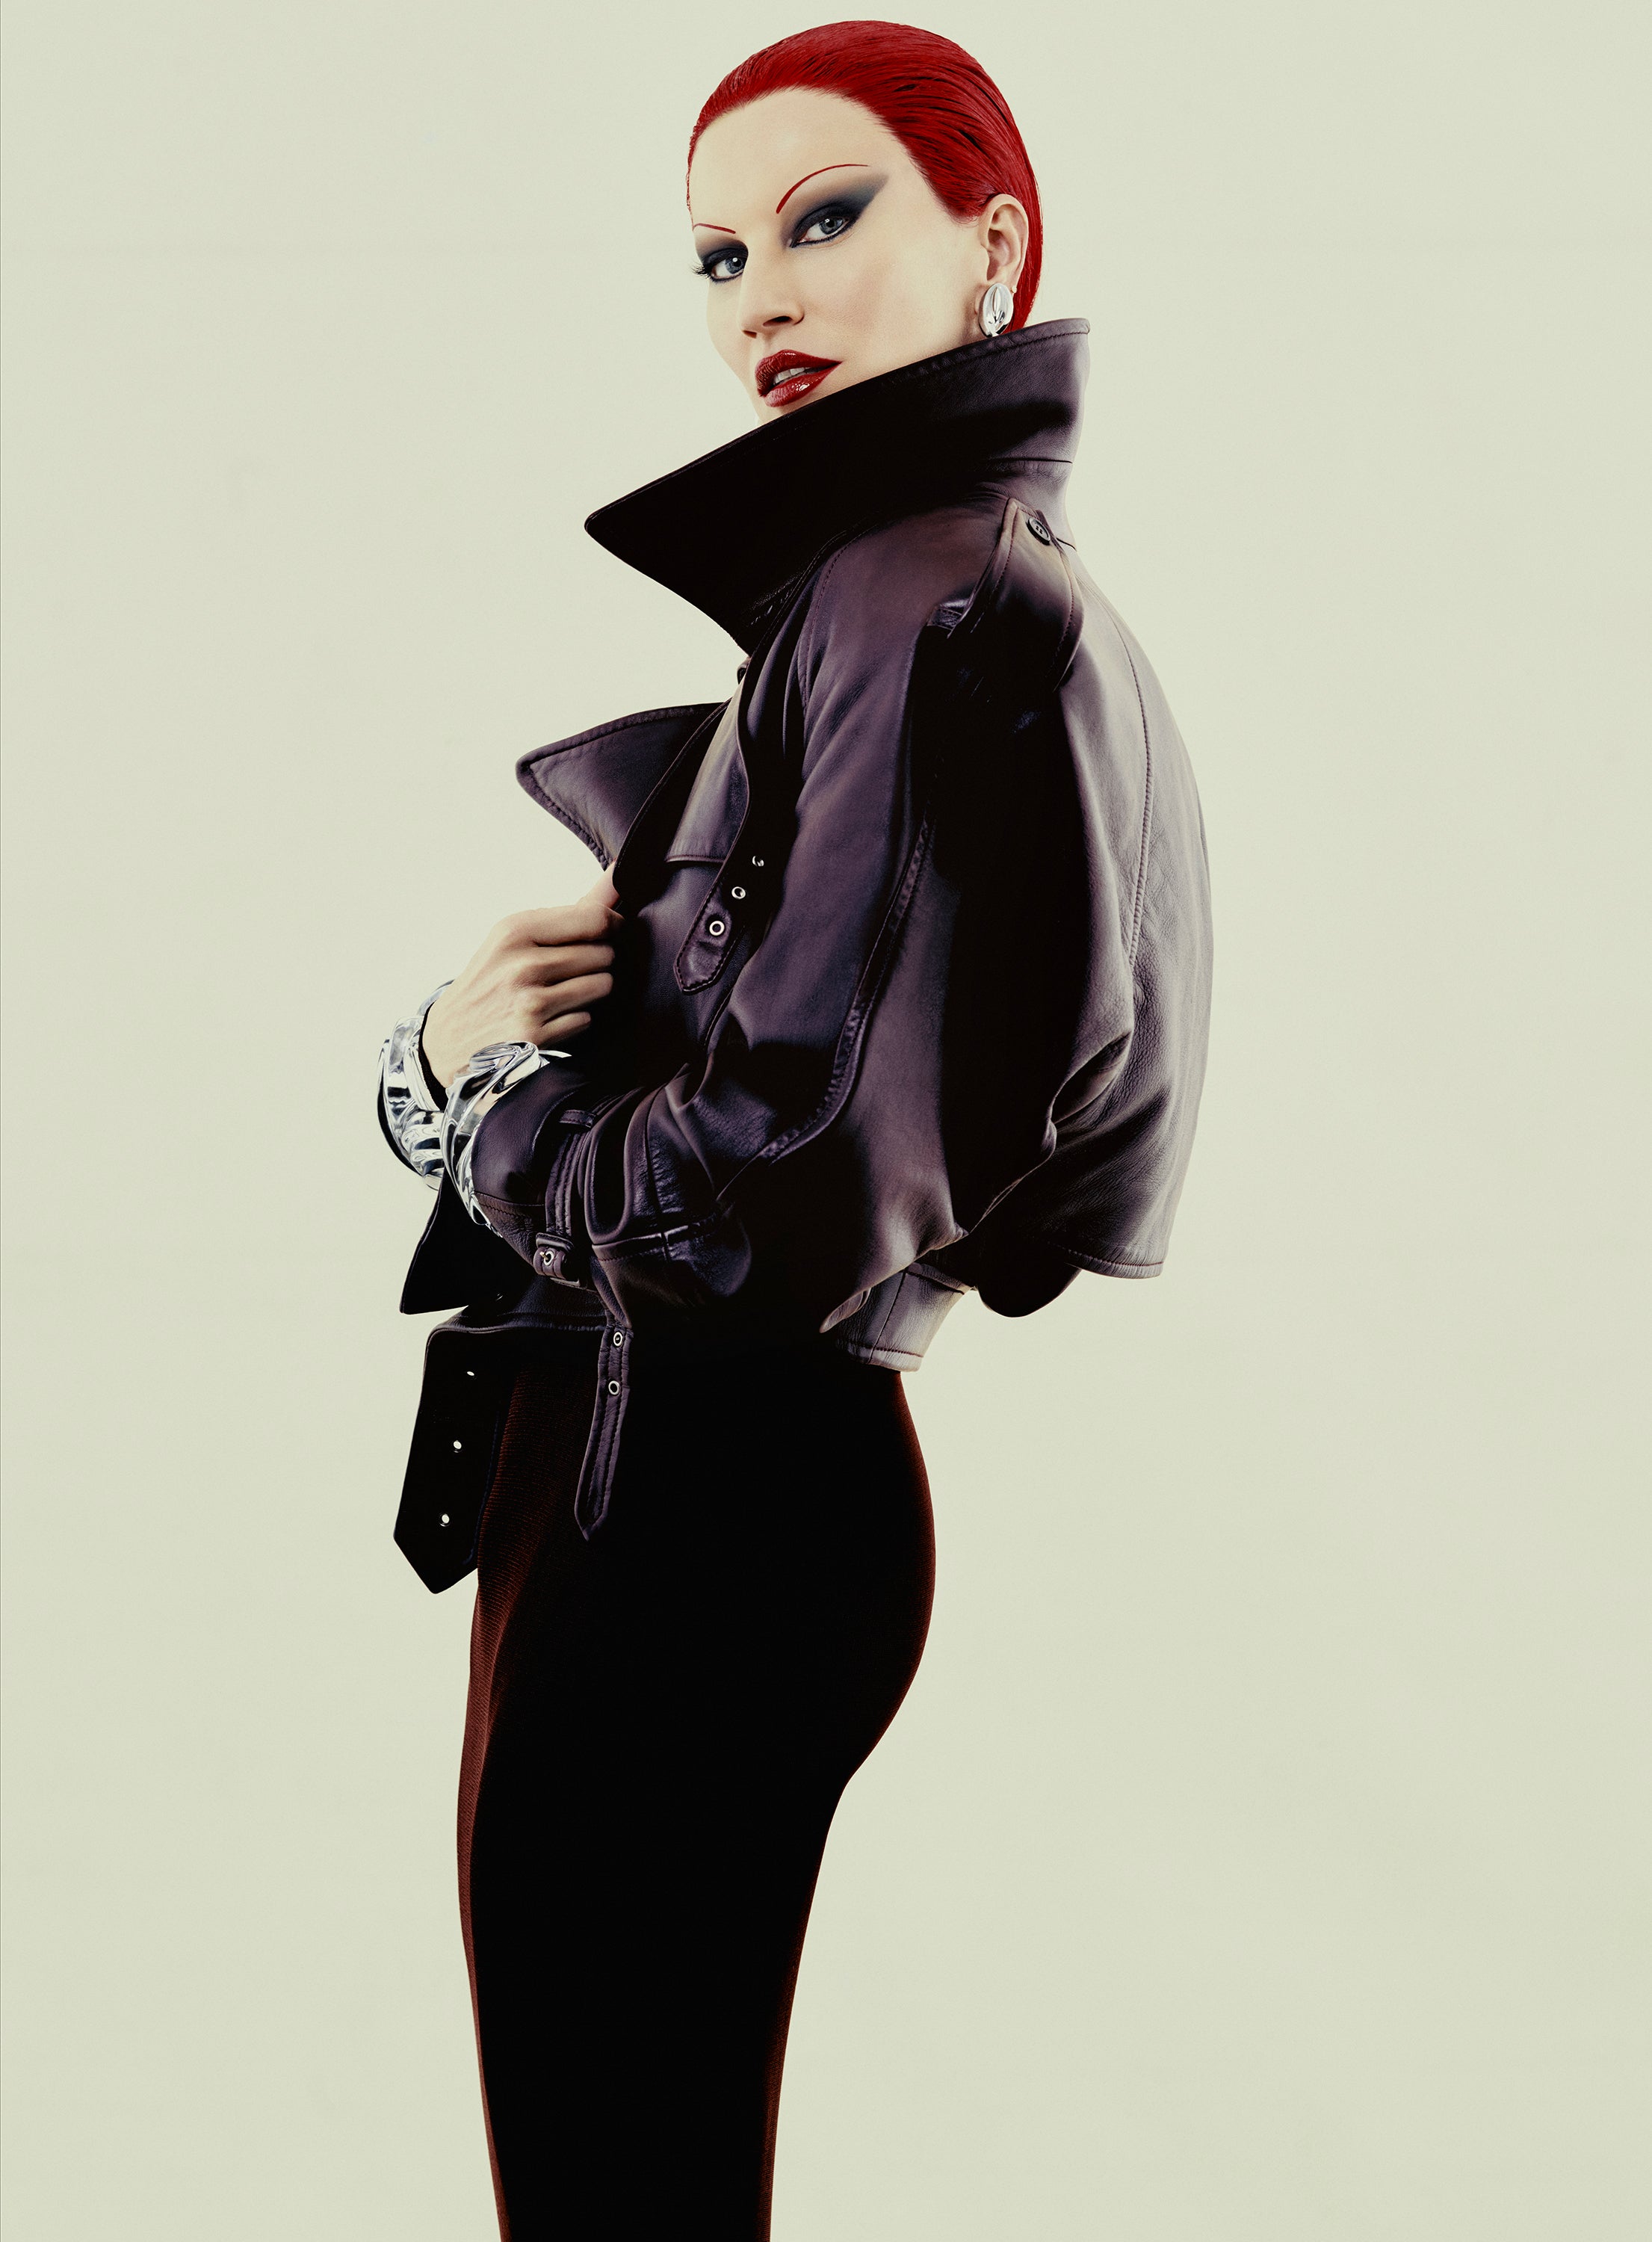 Gisele Bundchen poses for Vogue Italia